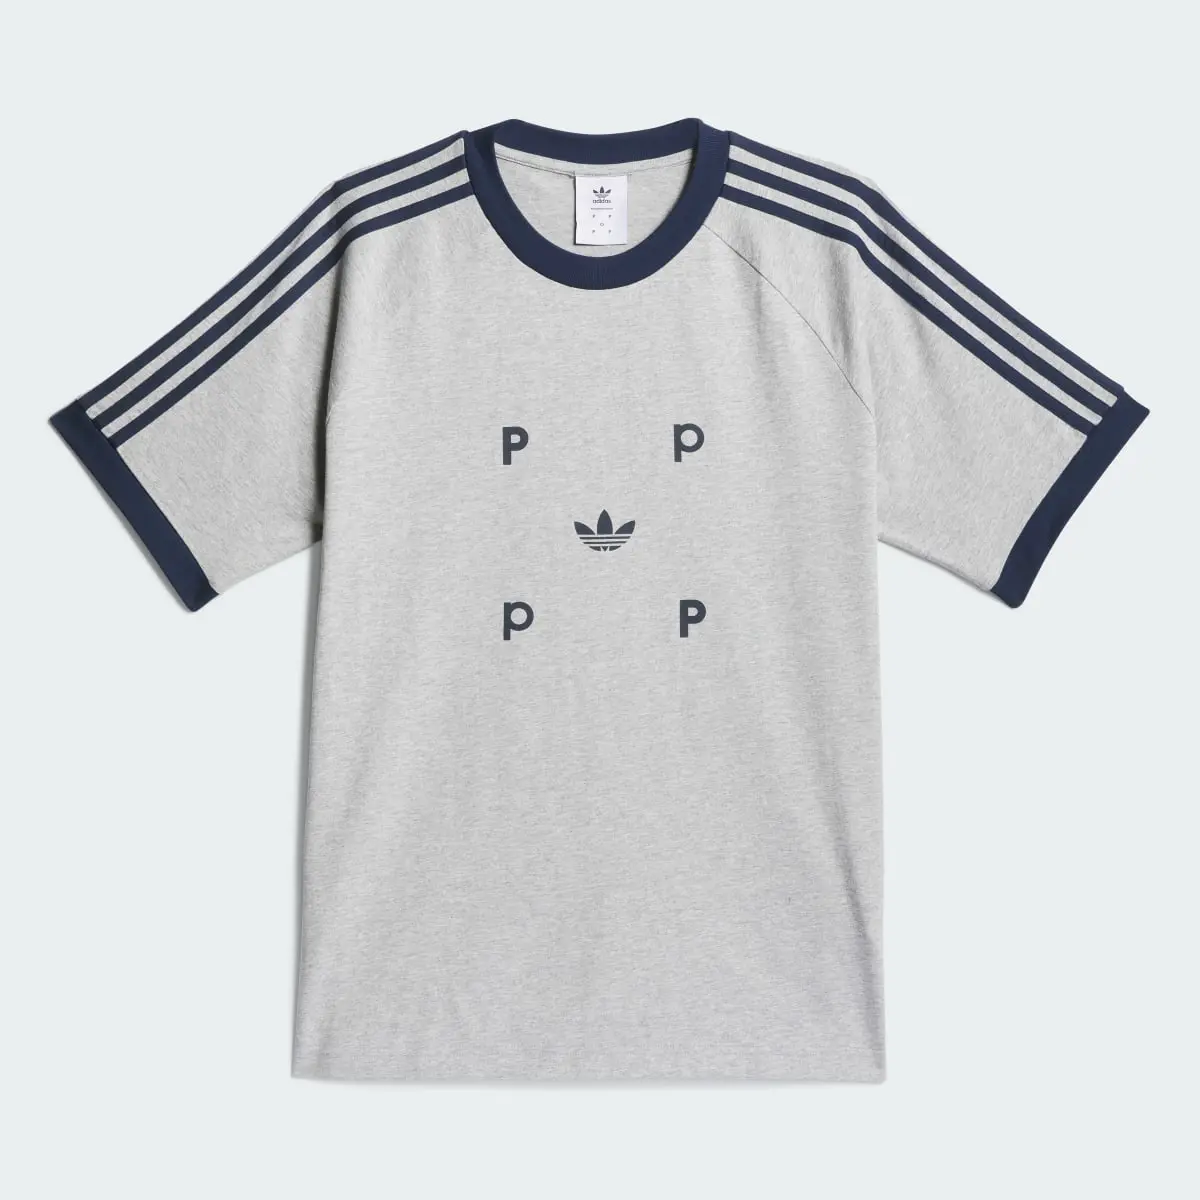 Adidas Pop Classic T-Shirt. 2